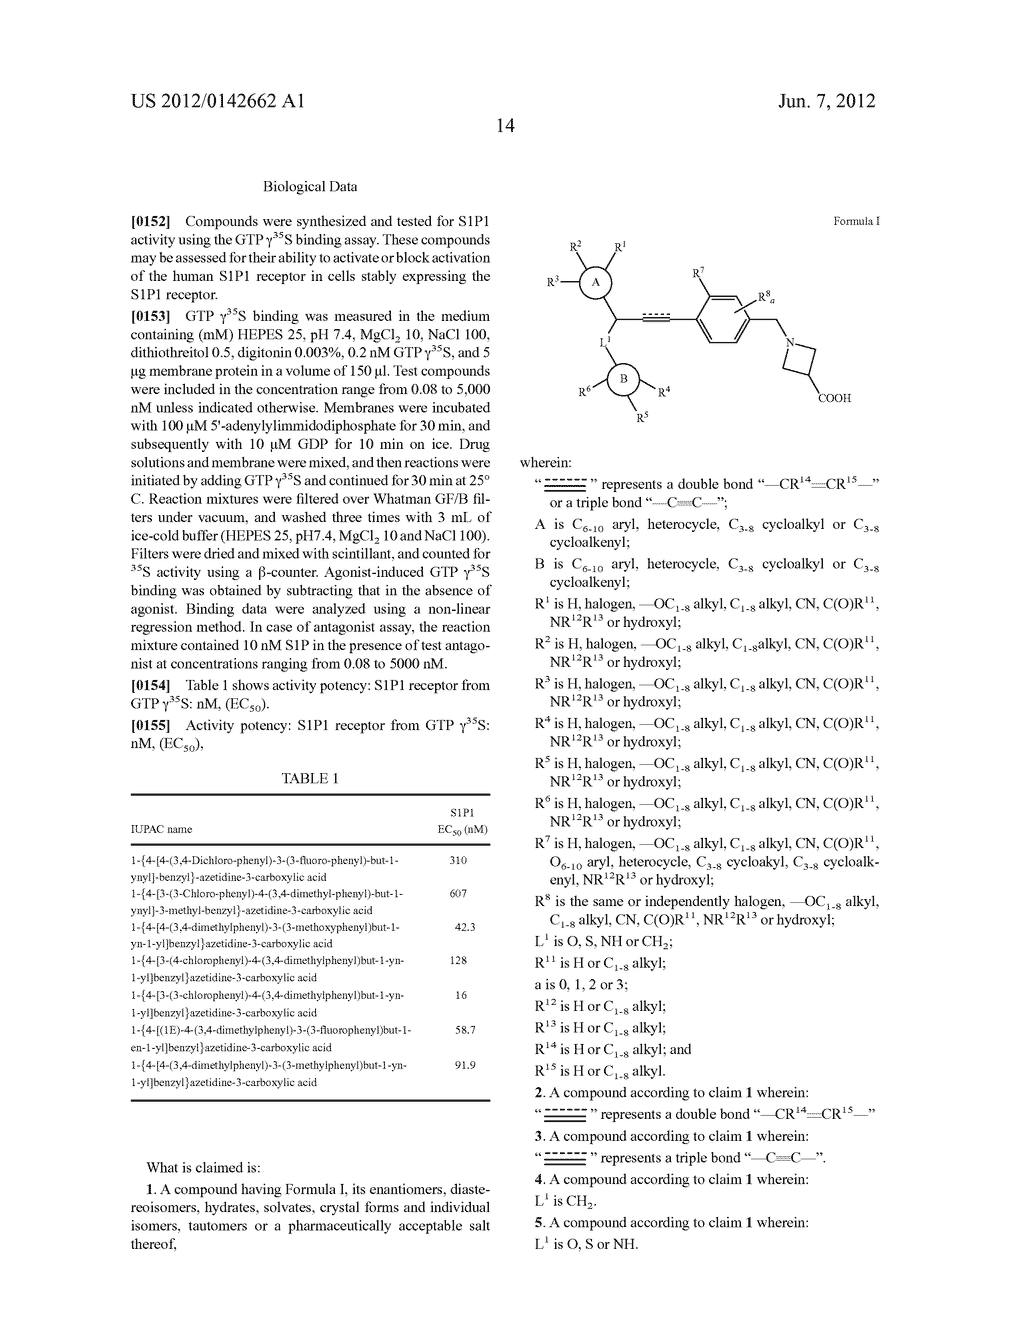 NOVEL AZETIDINE DERIVATIVES AS SPHINGOSINE 1-PHOSPHATE (S1P) RECEPTOR     MODULATORS - diagram, schematic, and image 15